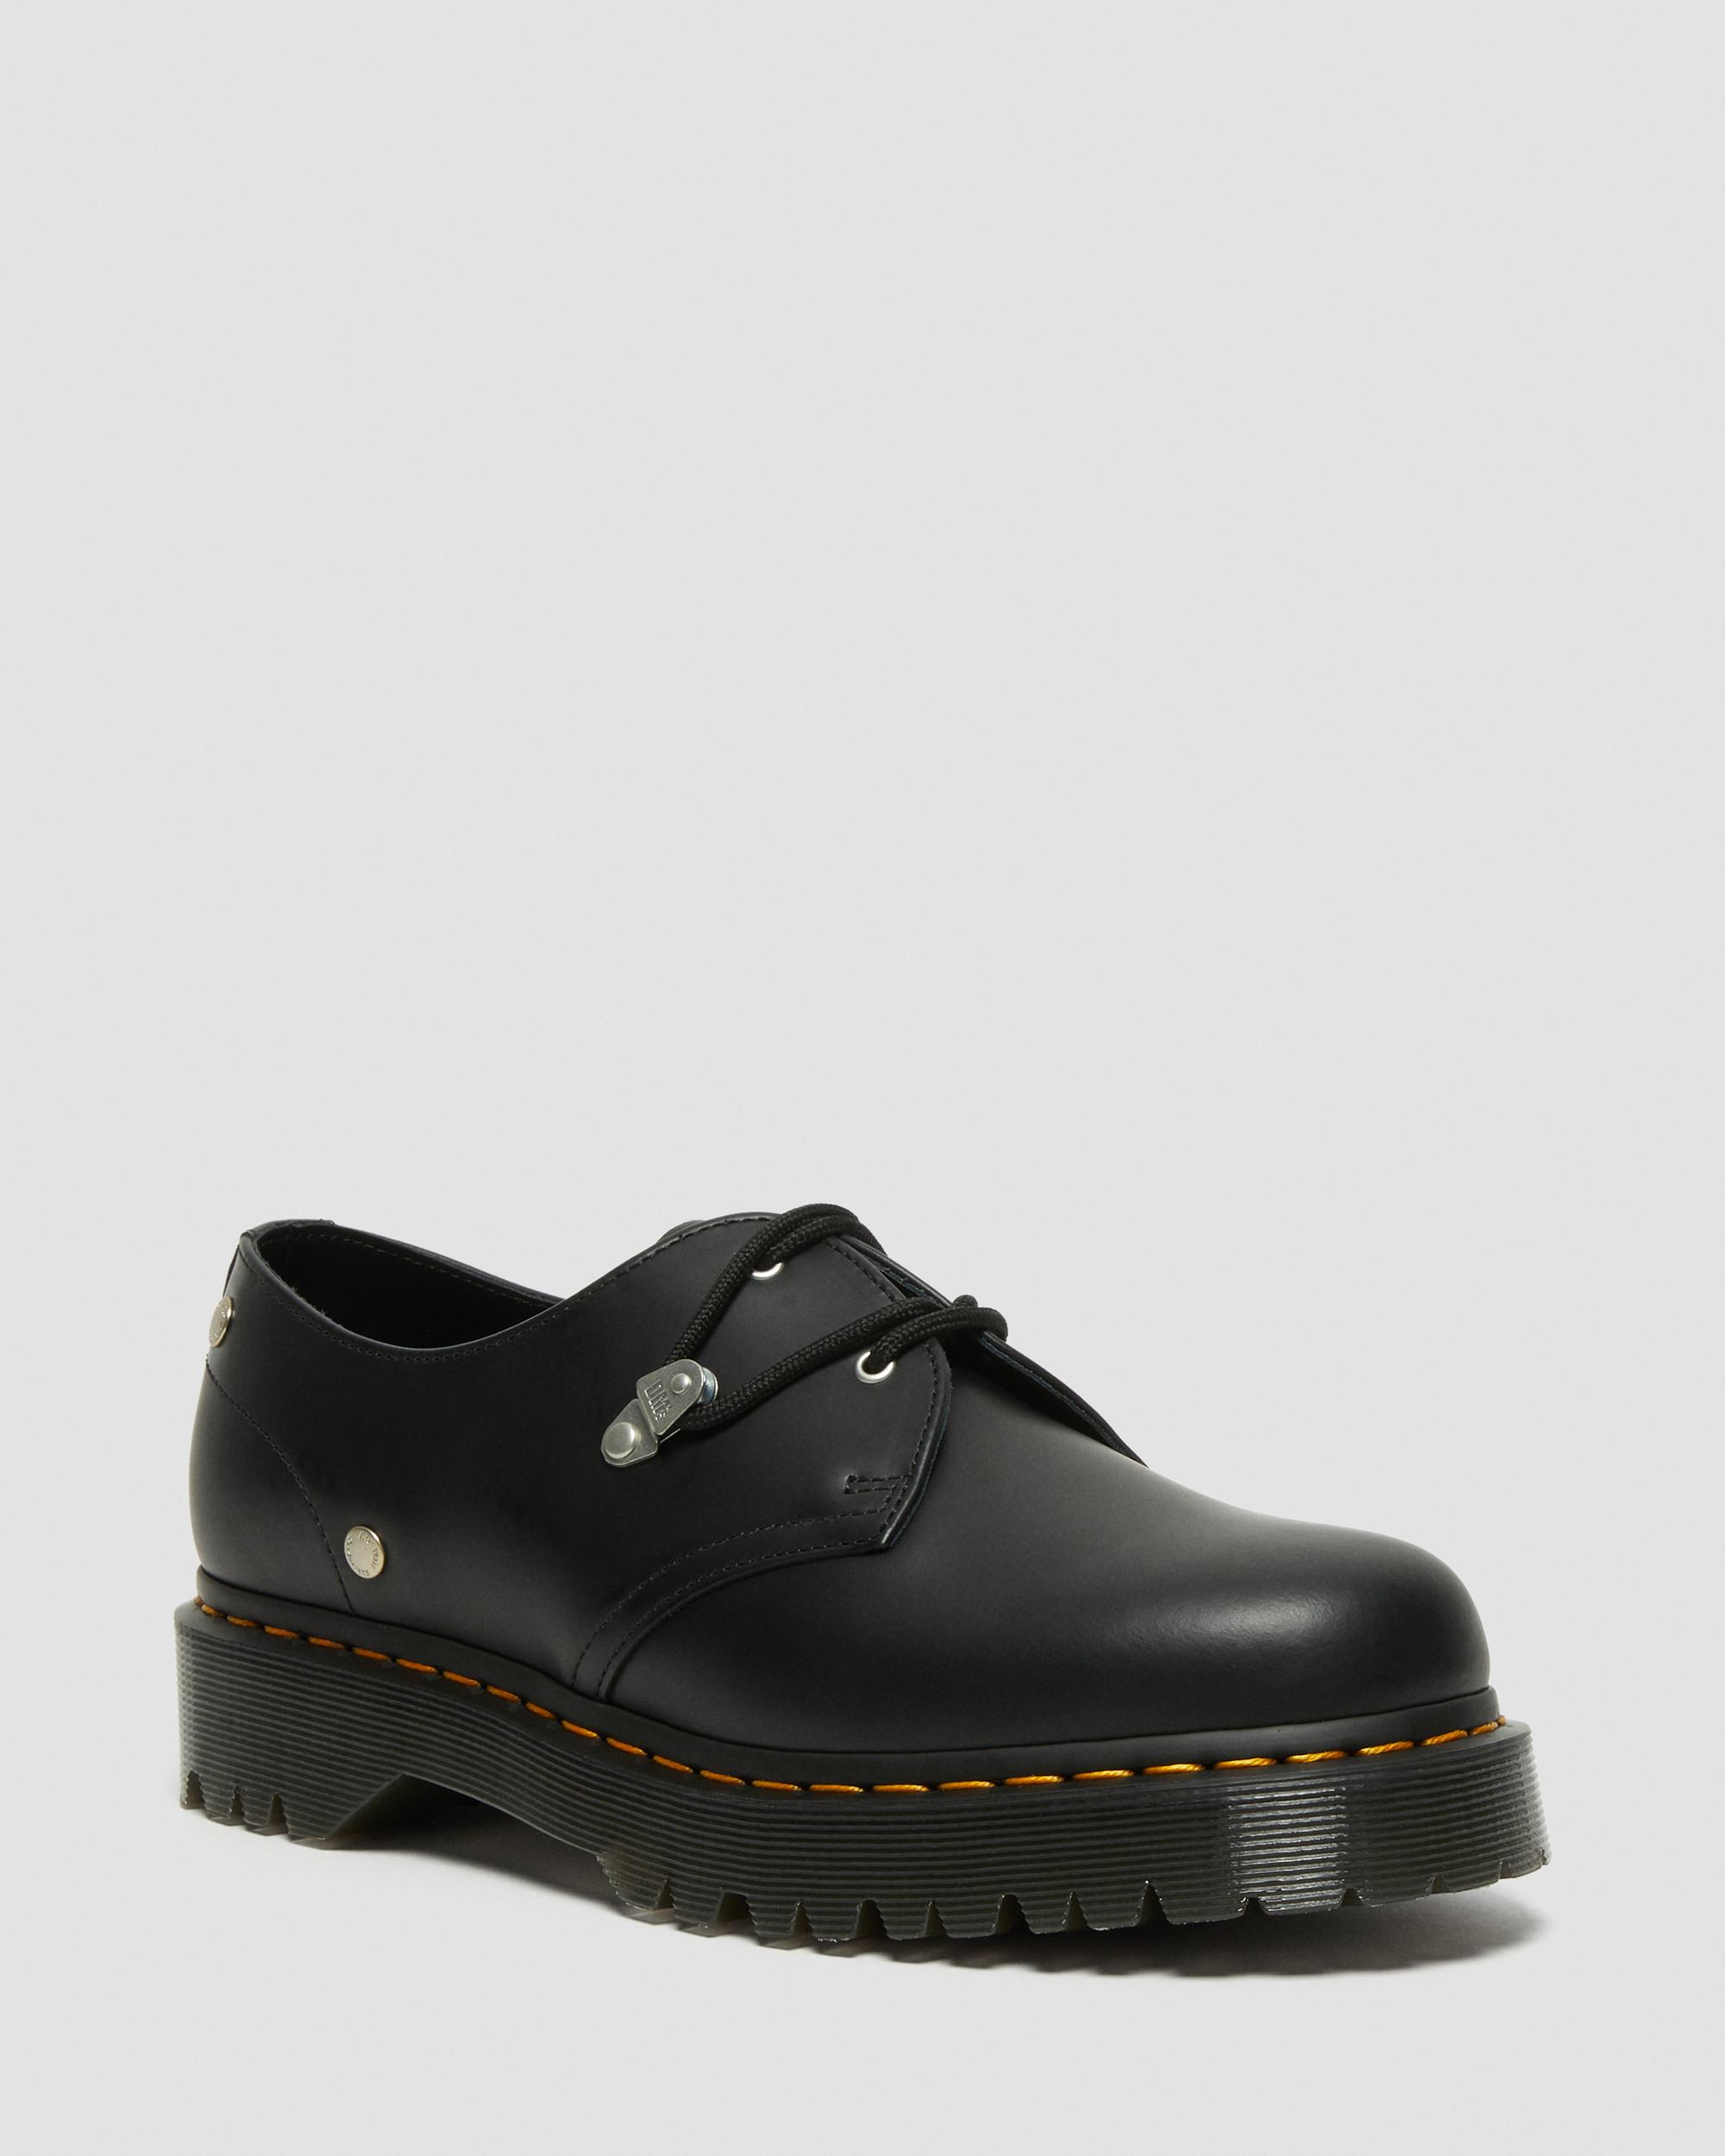 1461 Bex Stud Leather Shoes in Black | Dr. Martens